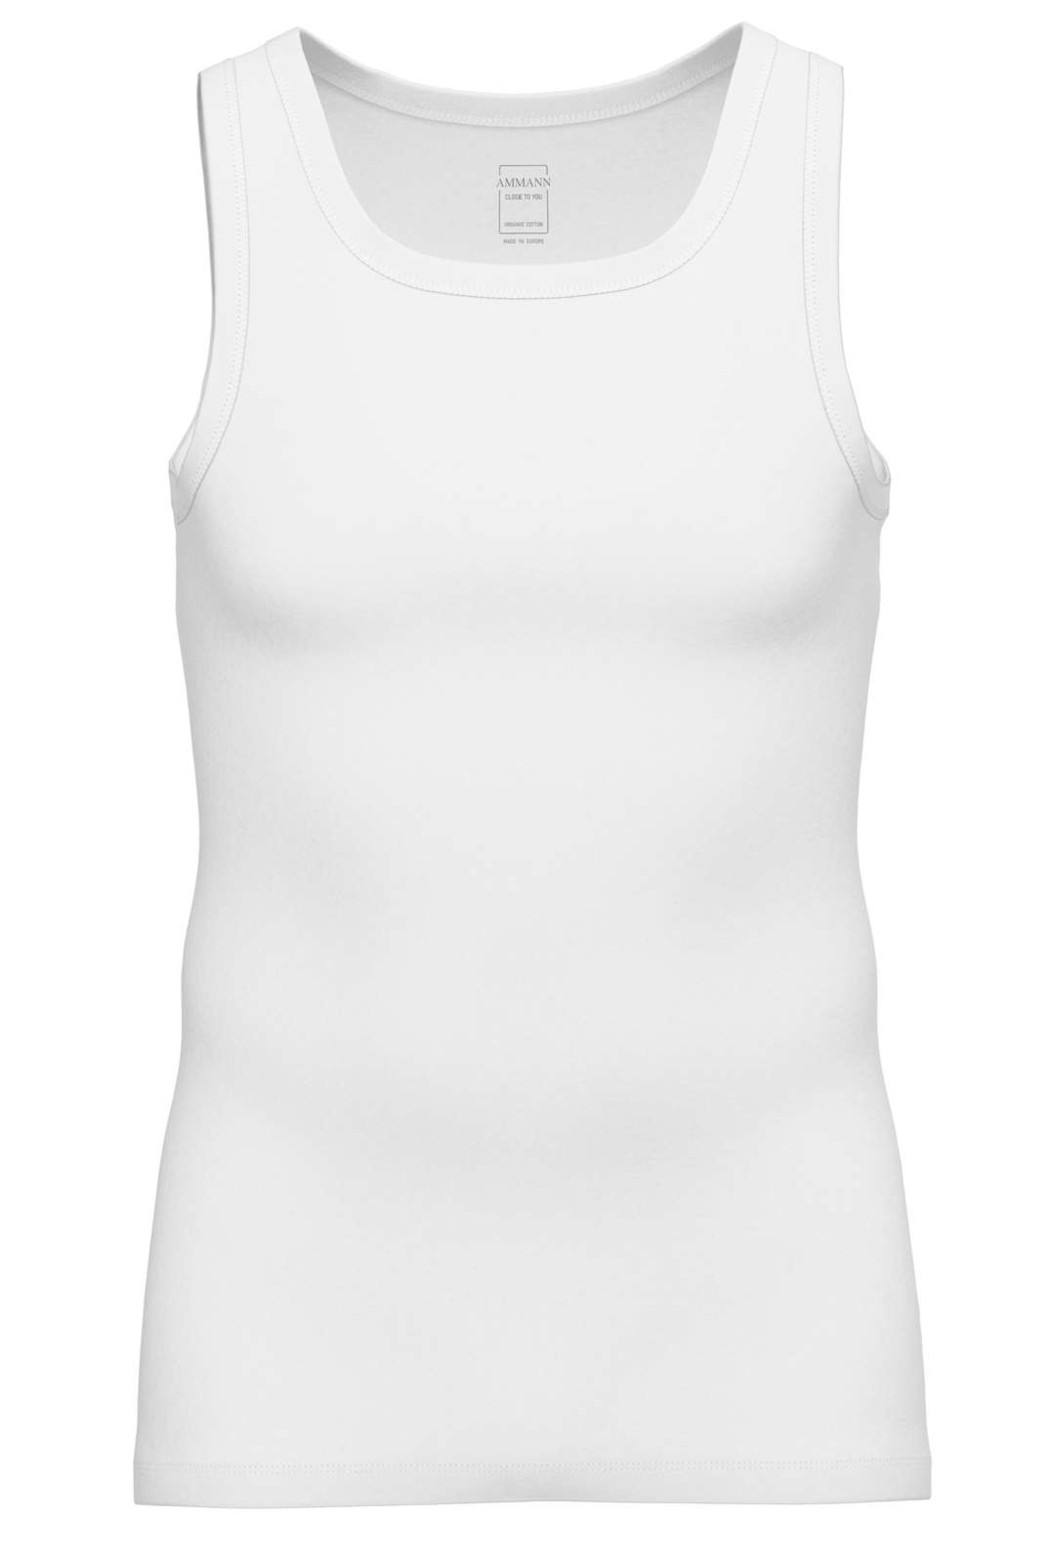 Ammann Herren Single-Jersey Athletic Shirt